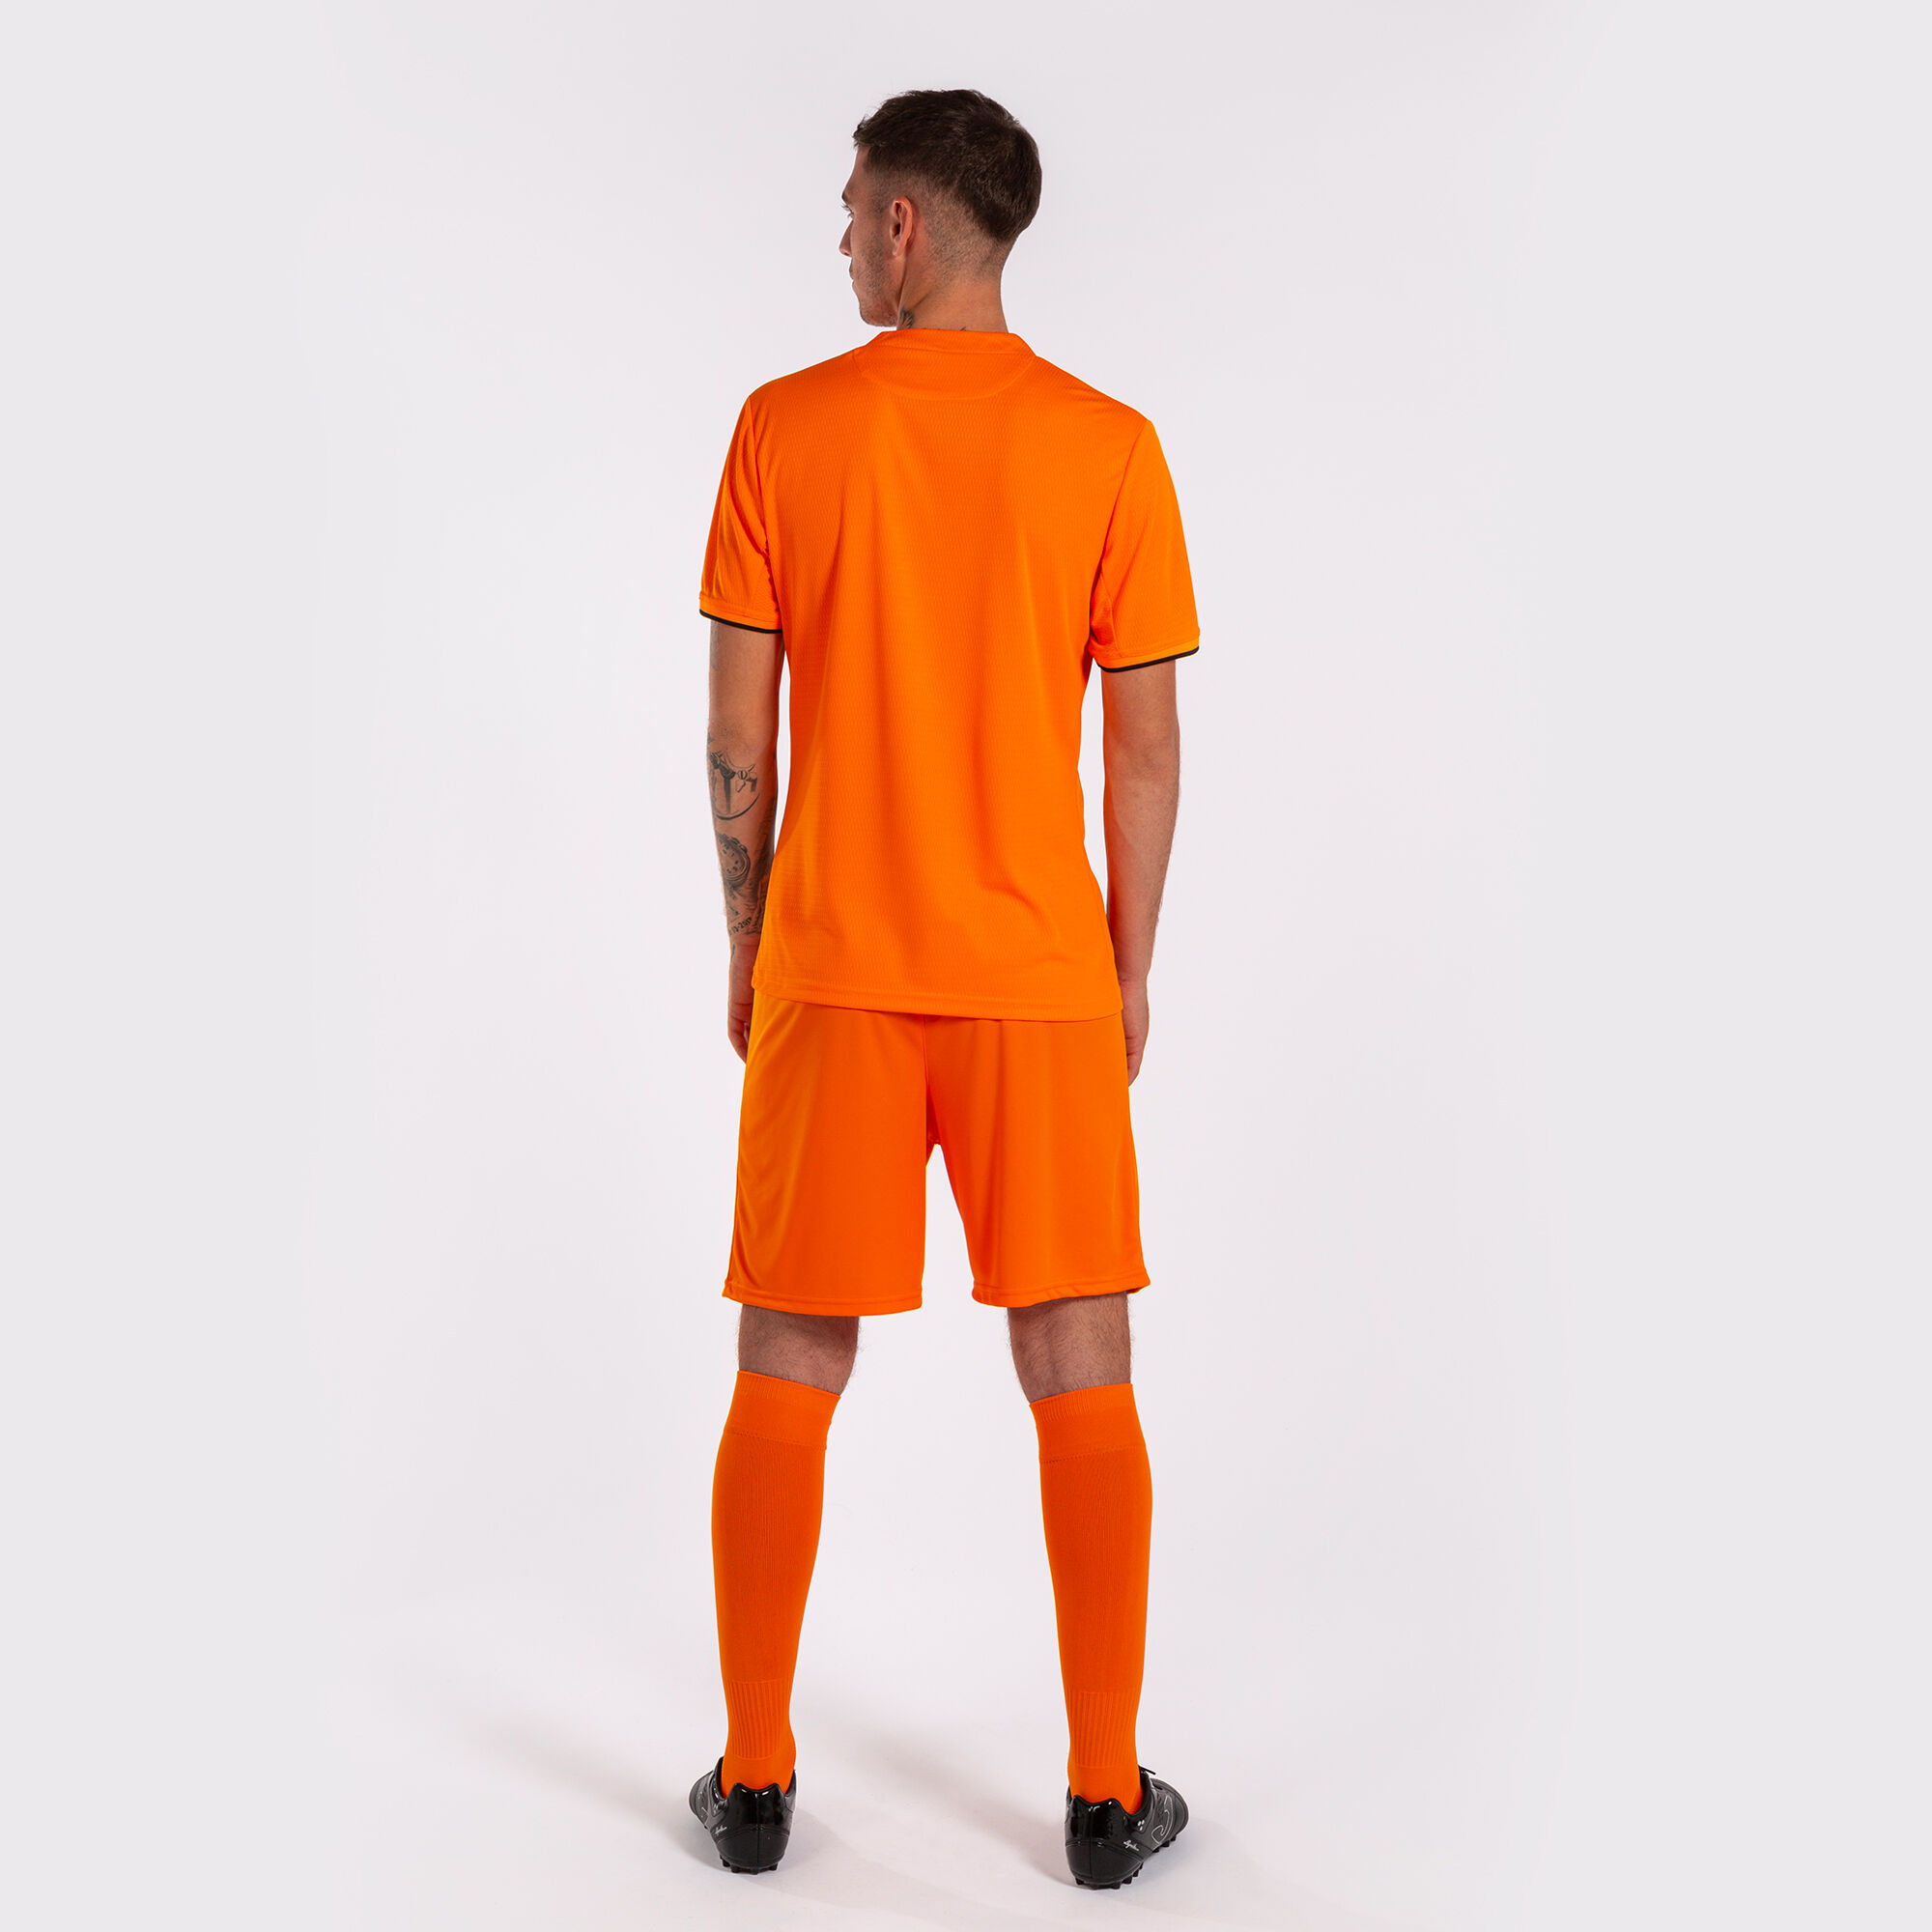 Camiseta manga corta hombre Toletum IV naranja negro